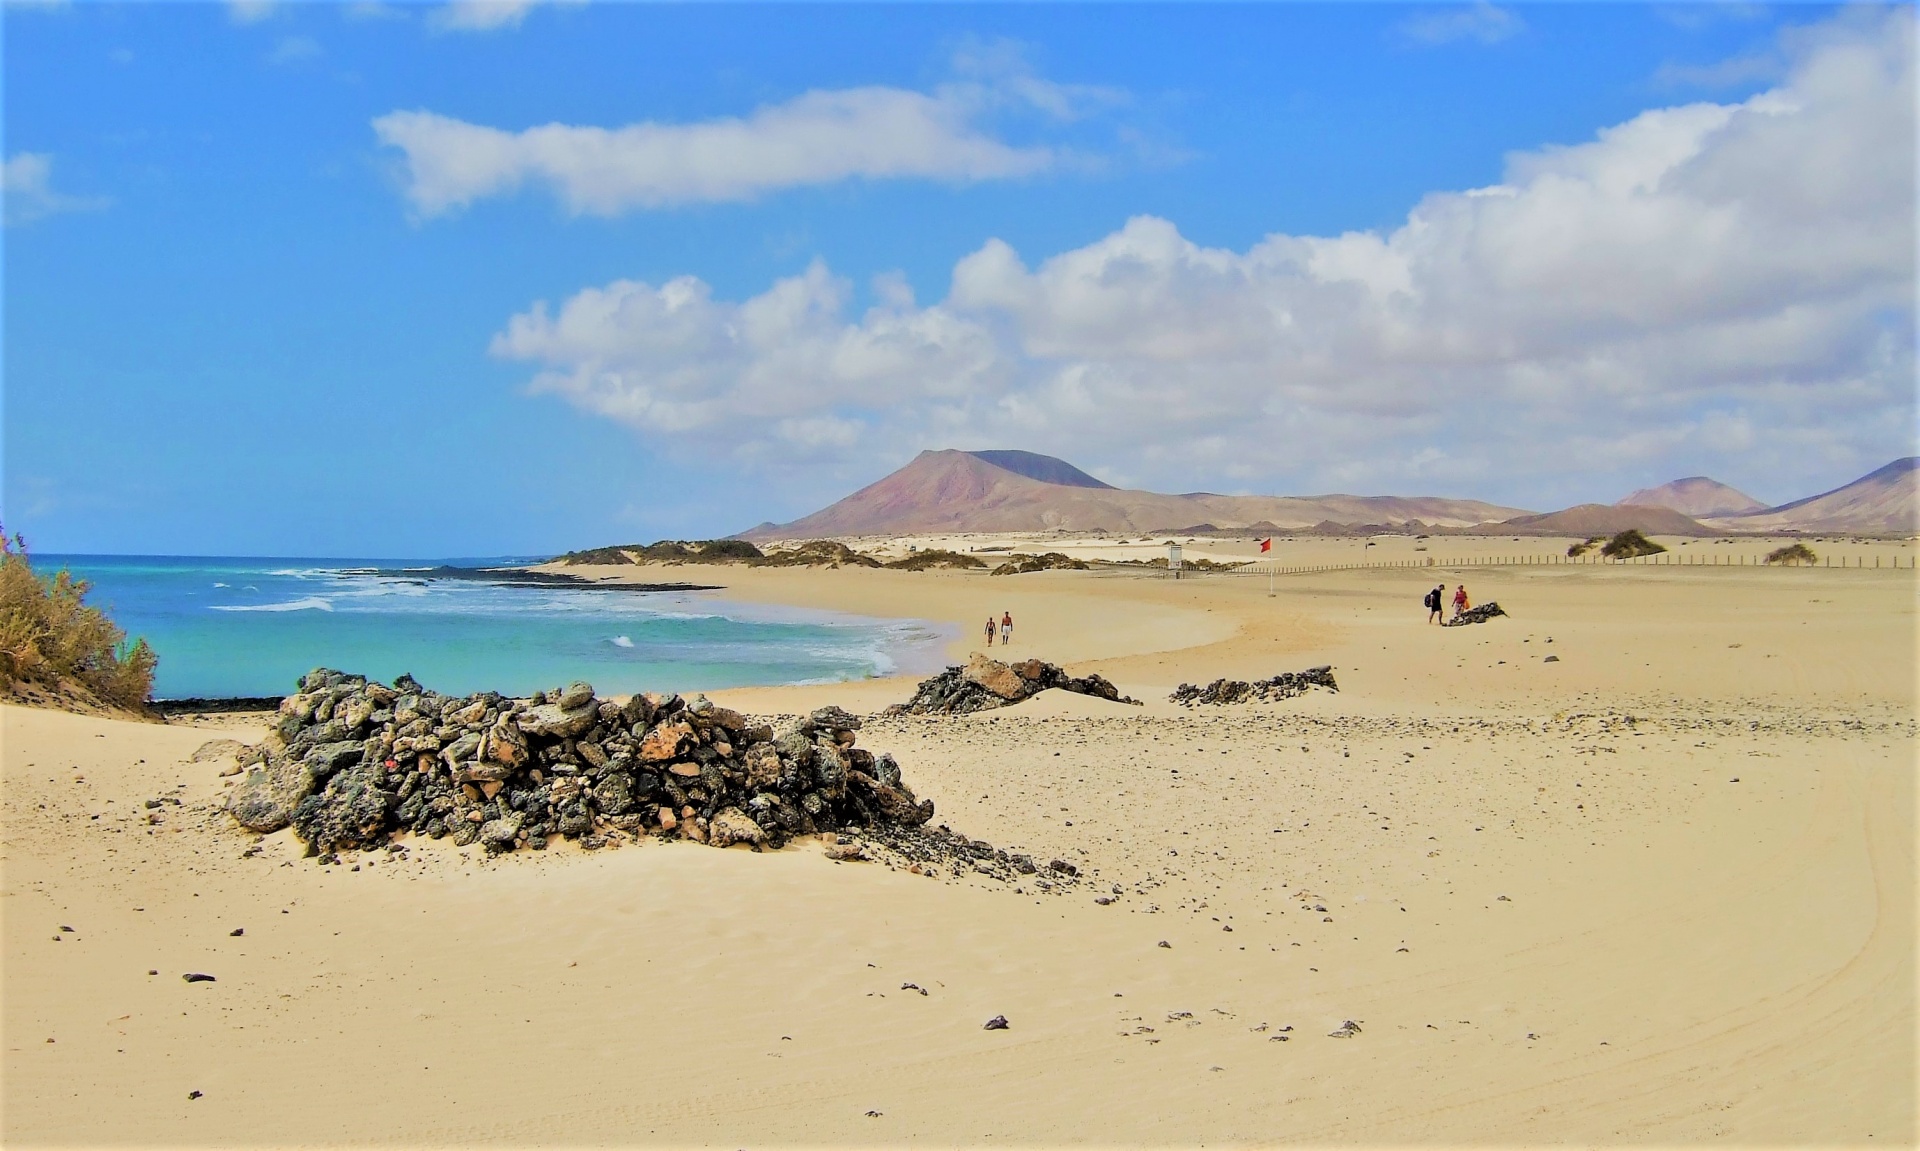 Playa del Moro at the Corralejo sand dunes area of Fuerteventura